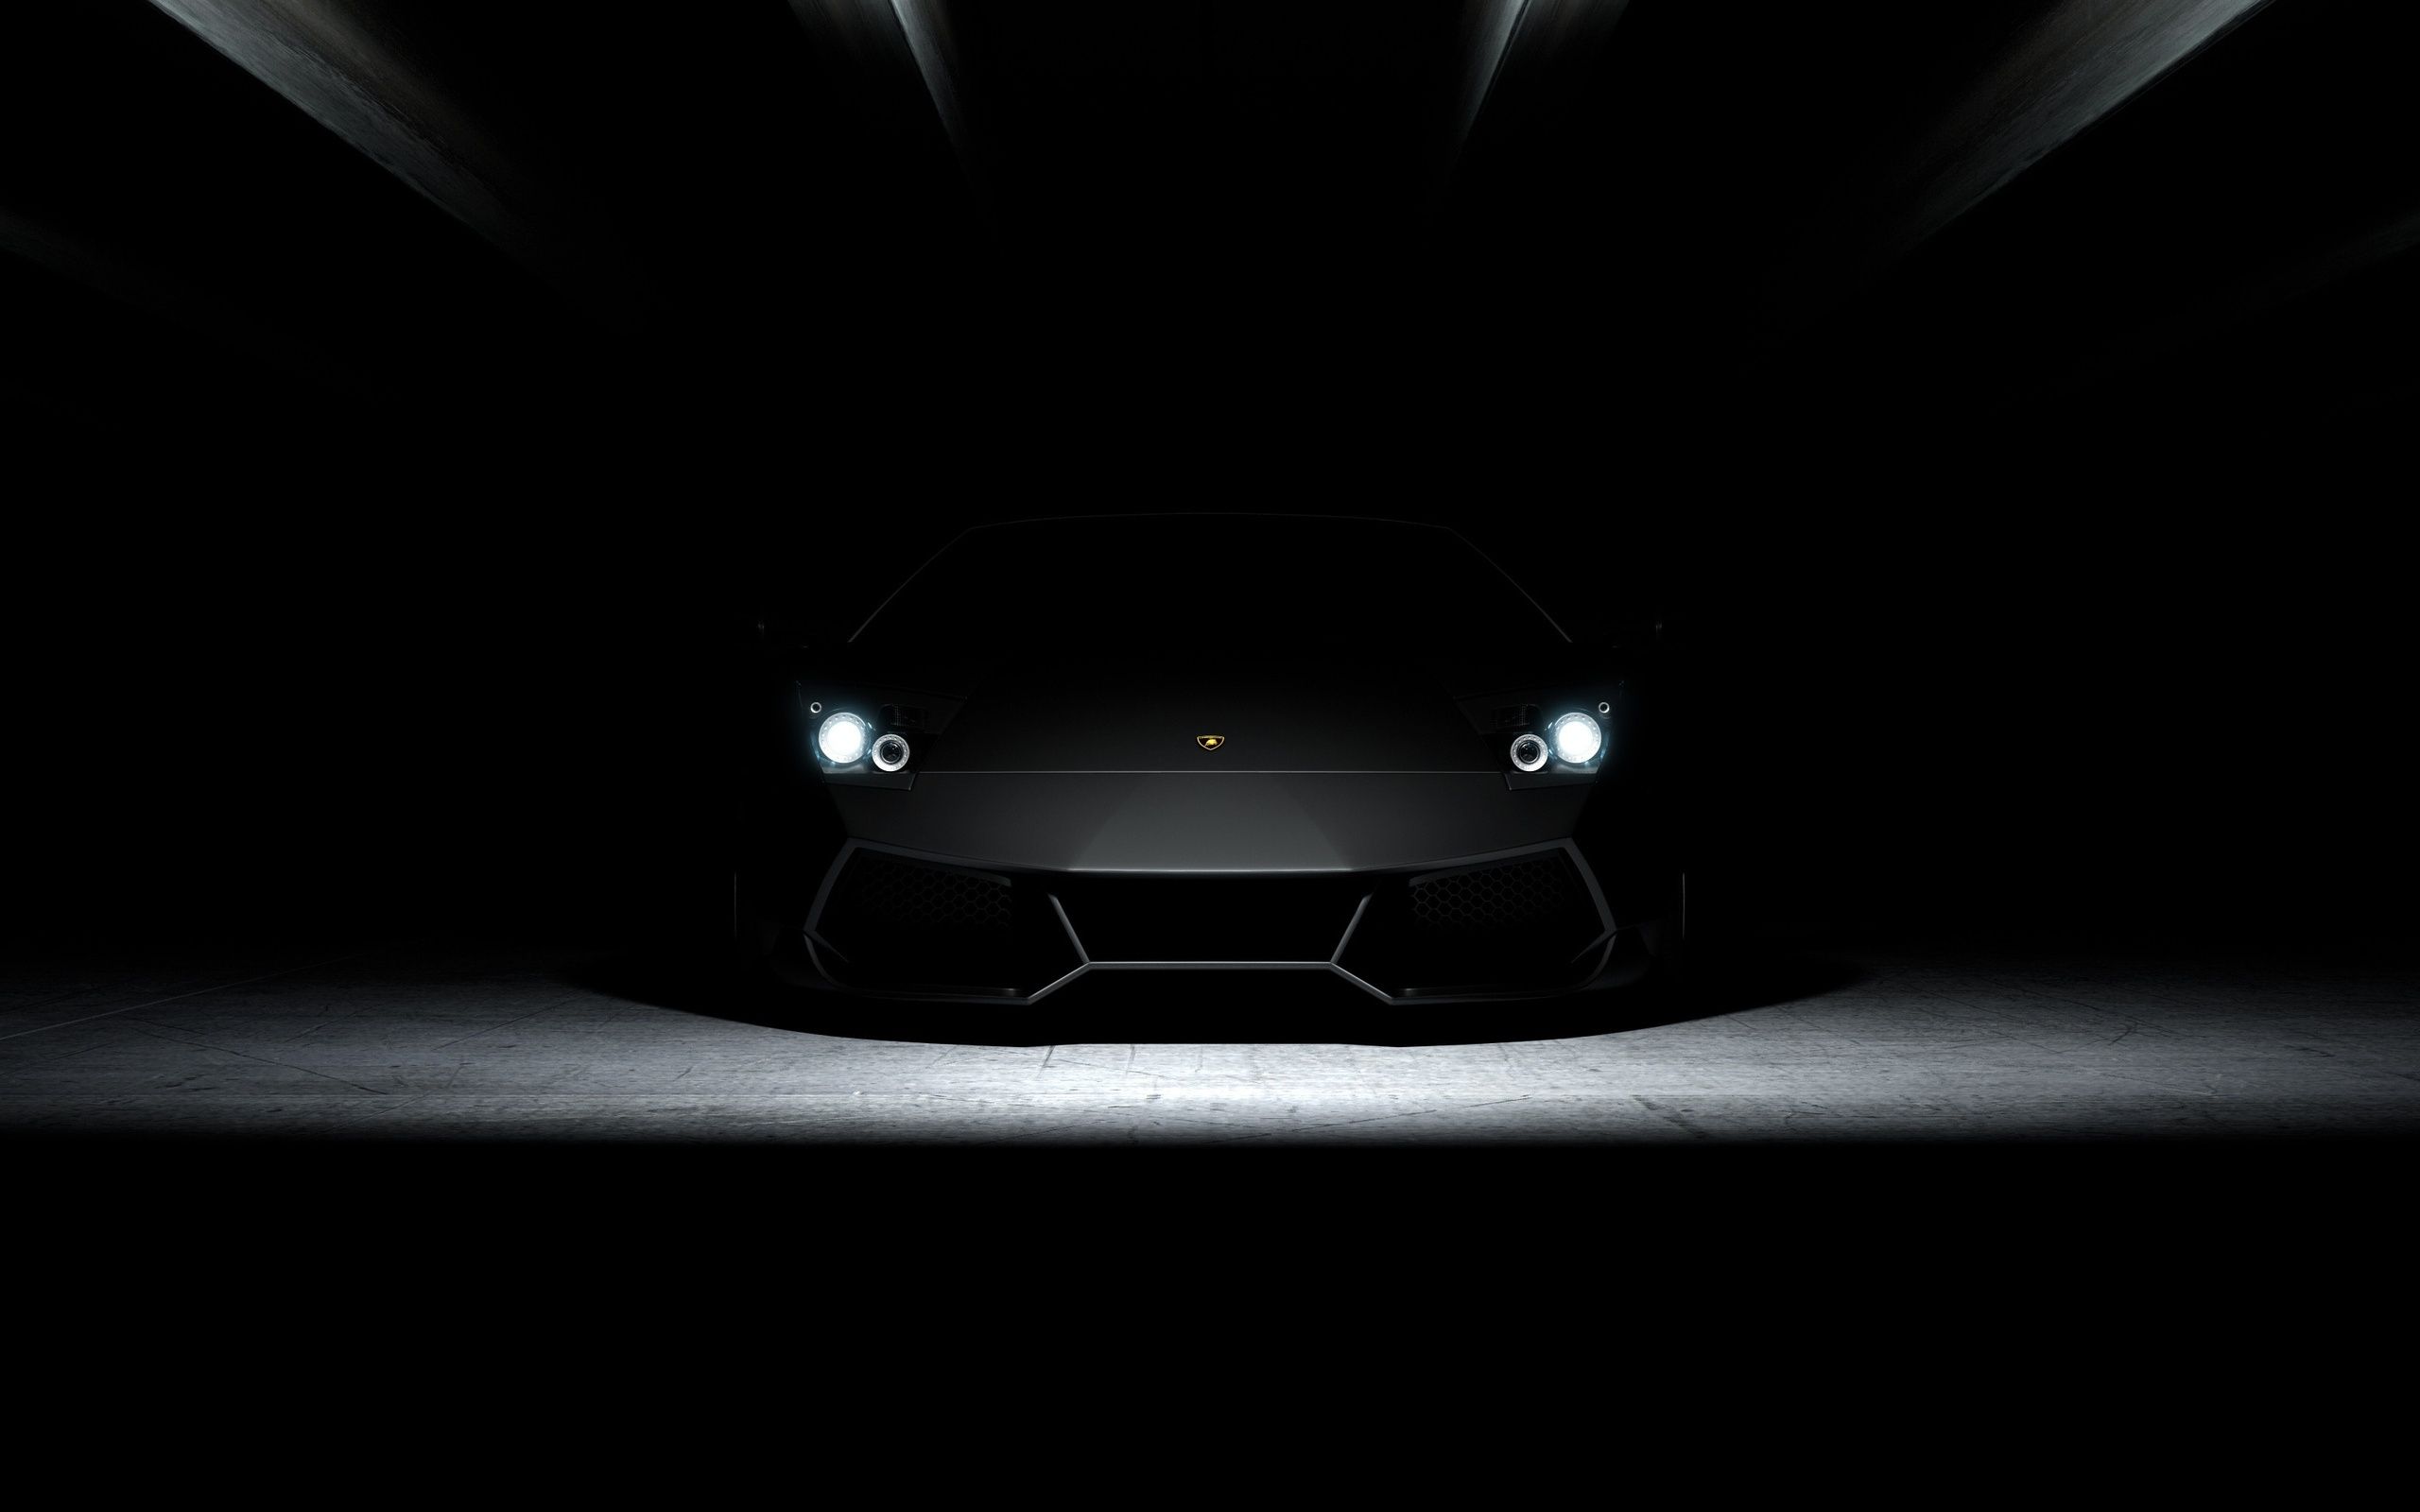 Best Macbook Pro Retina Wallpapers In High Quality, - Lamborghini Aventador  Wallpaper Hd - 2560x1600 Wallpaper 